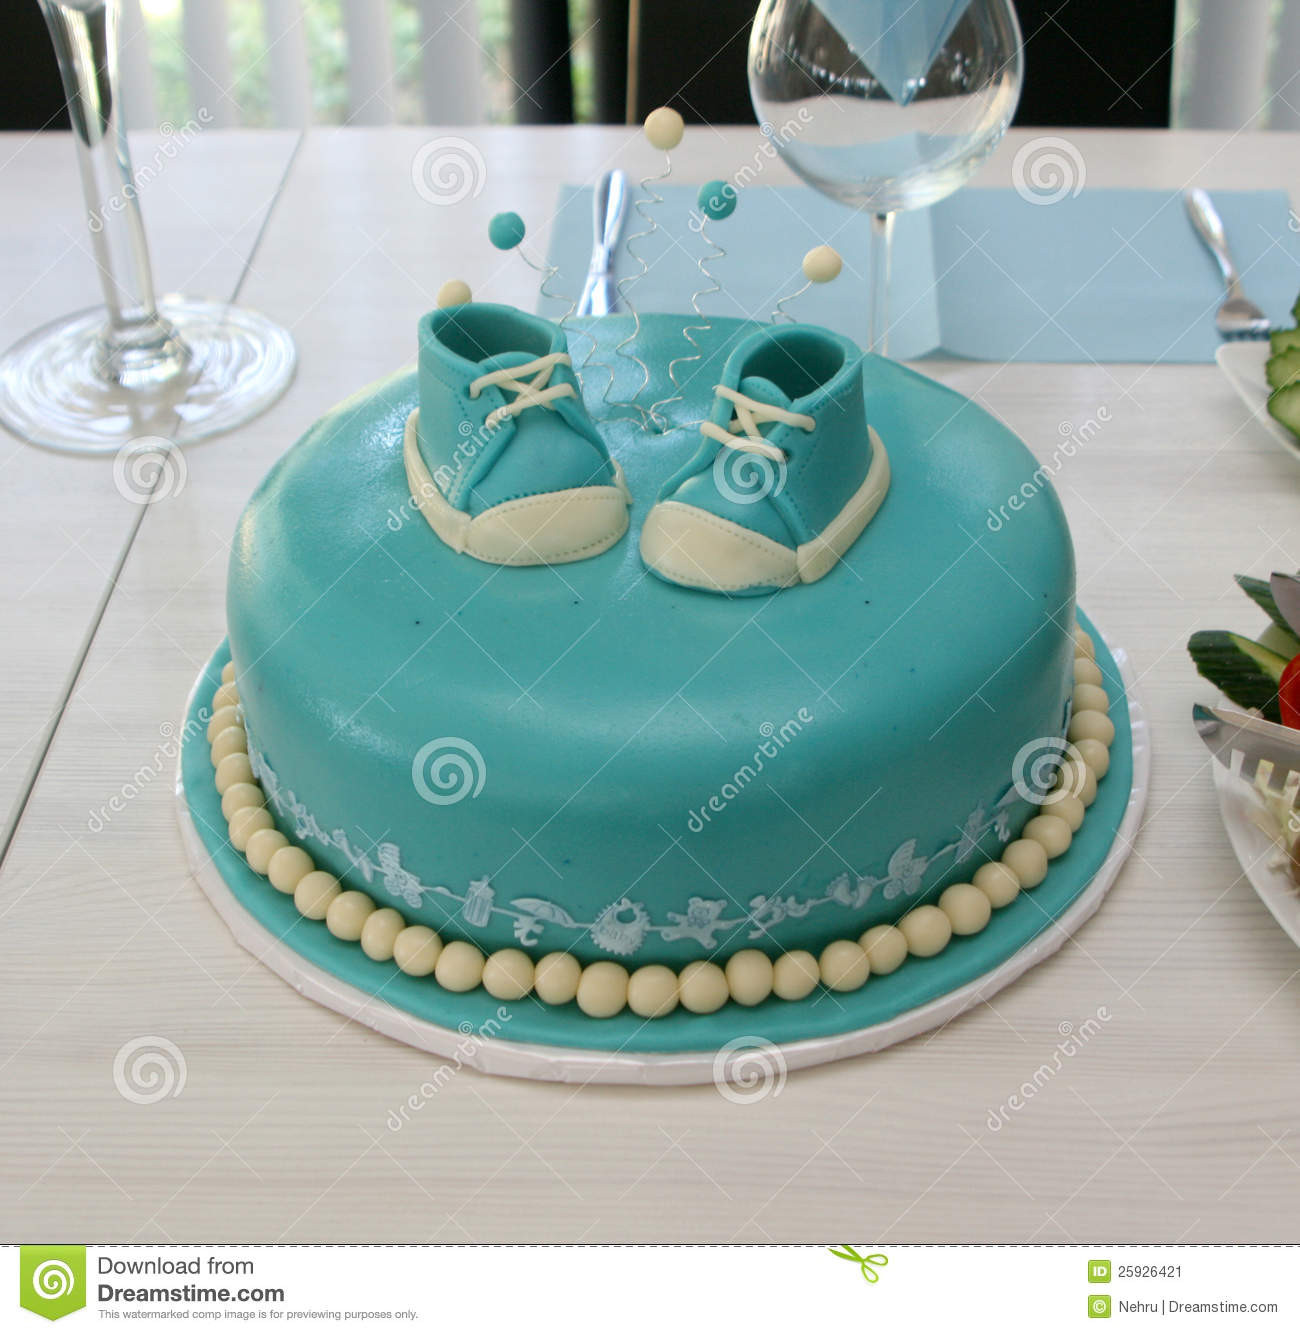 Birthday Cake For Baby Boy
 Baby boy birthday cake stock image Image of celebration